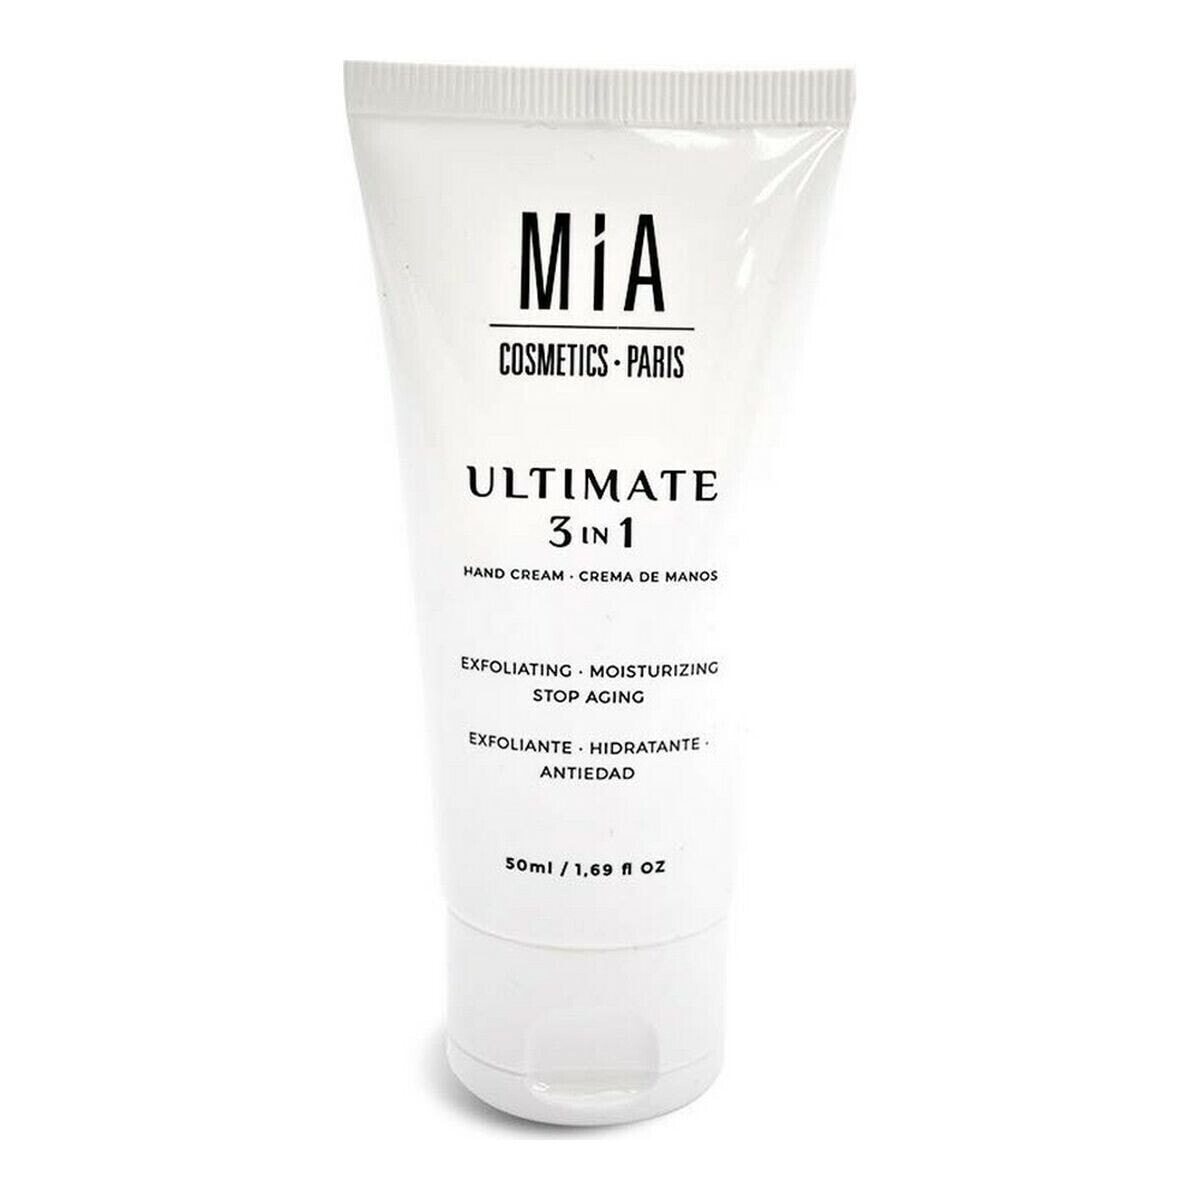 Крем для рук Ultimate Mia Cosmetics Paris 3-в-1 (50 ml)